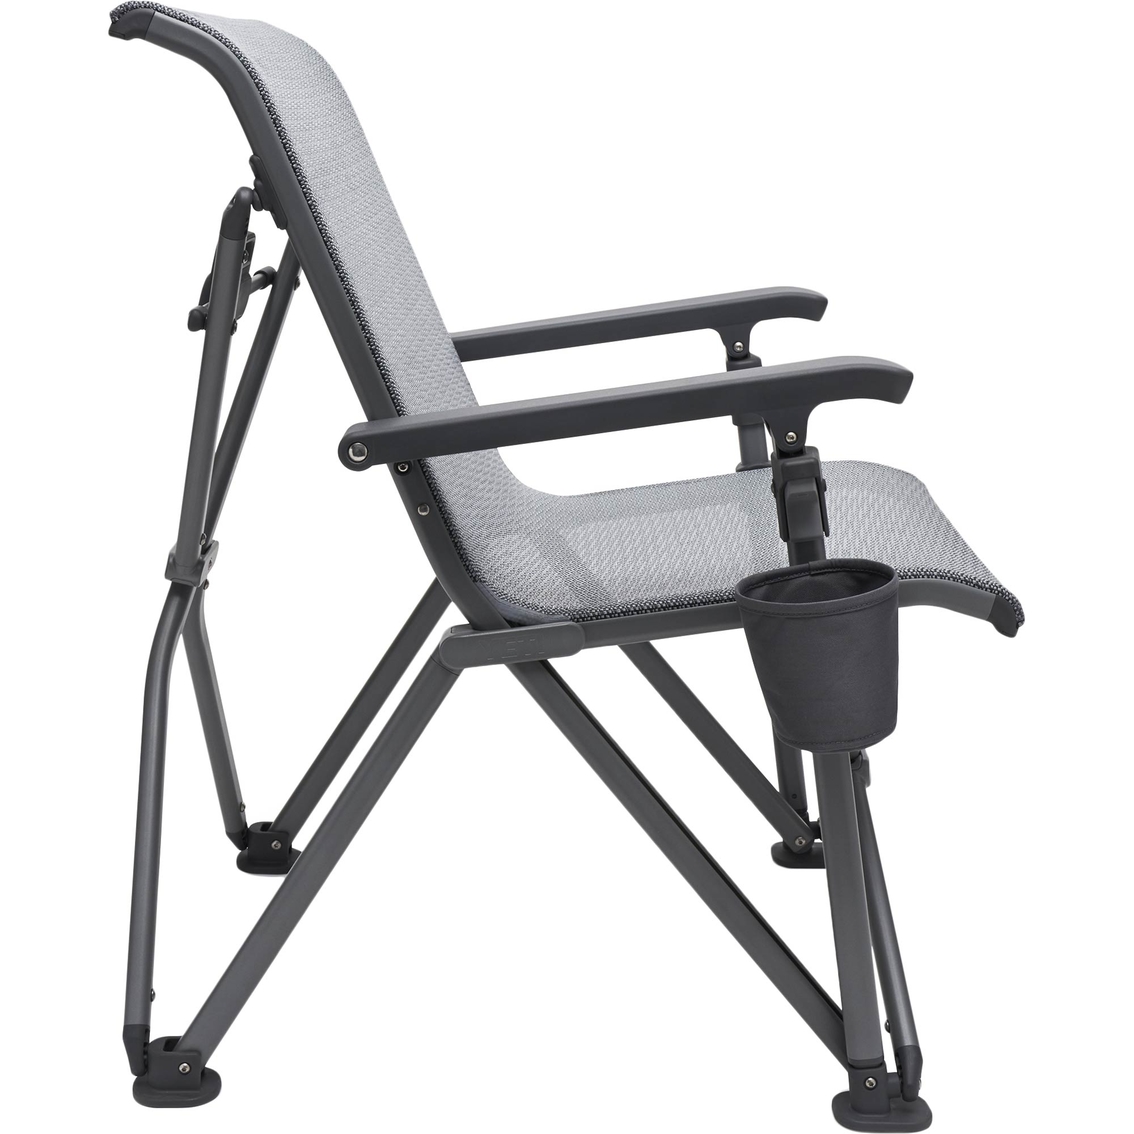 Yeti TrailHead Camp Chair - Image 2 of 3